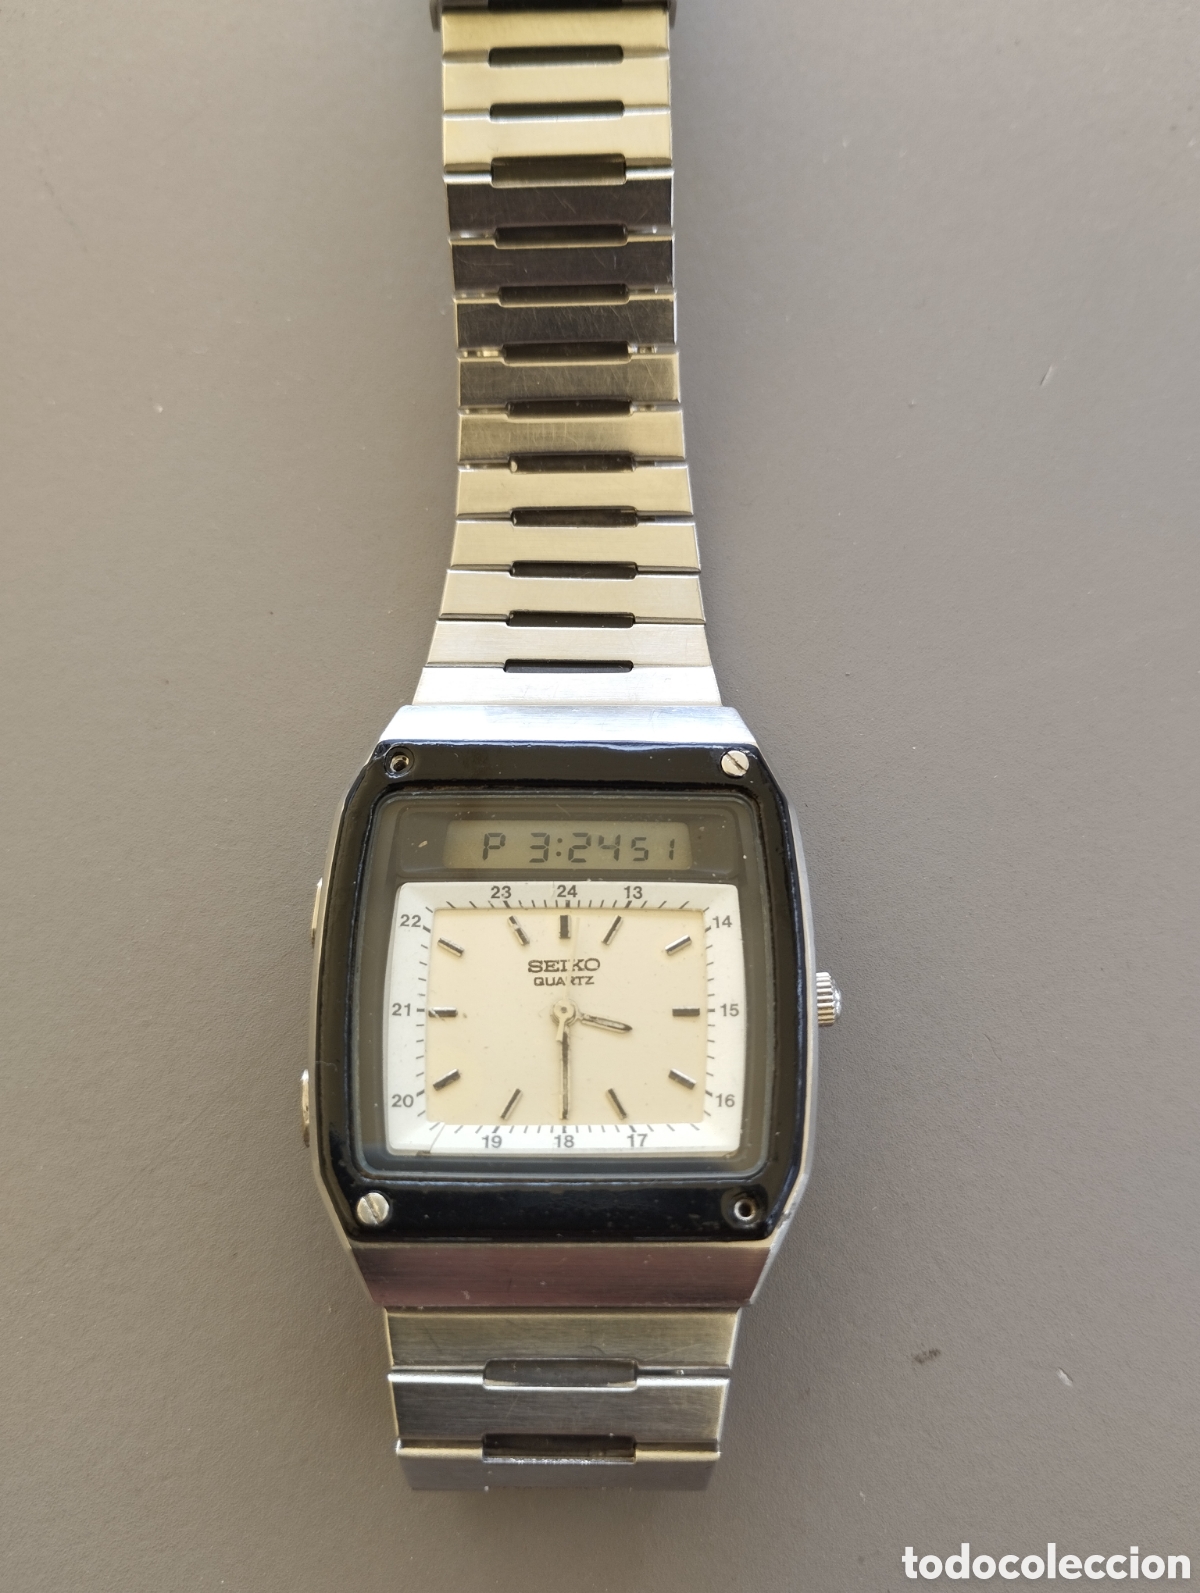 seiko h357-5040 james bond - Buy Vintage watches and clocks on todocoleccion